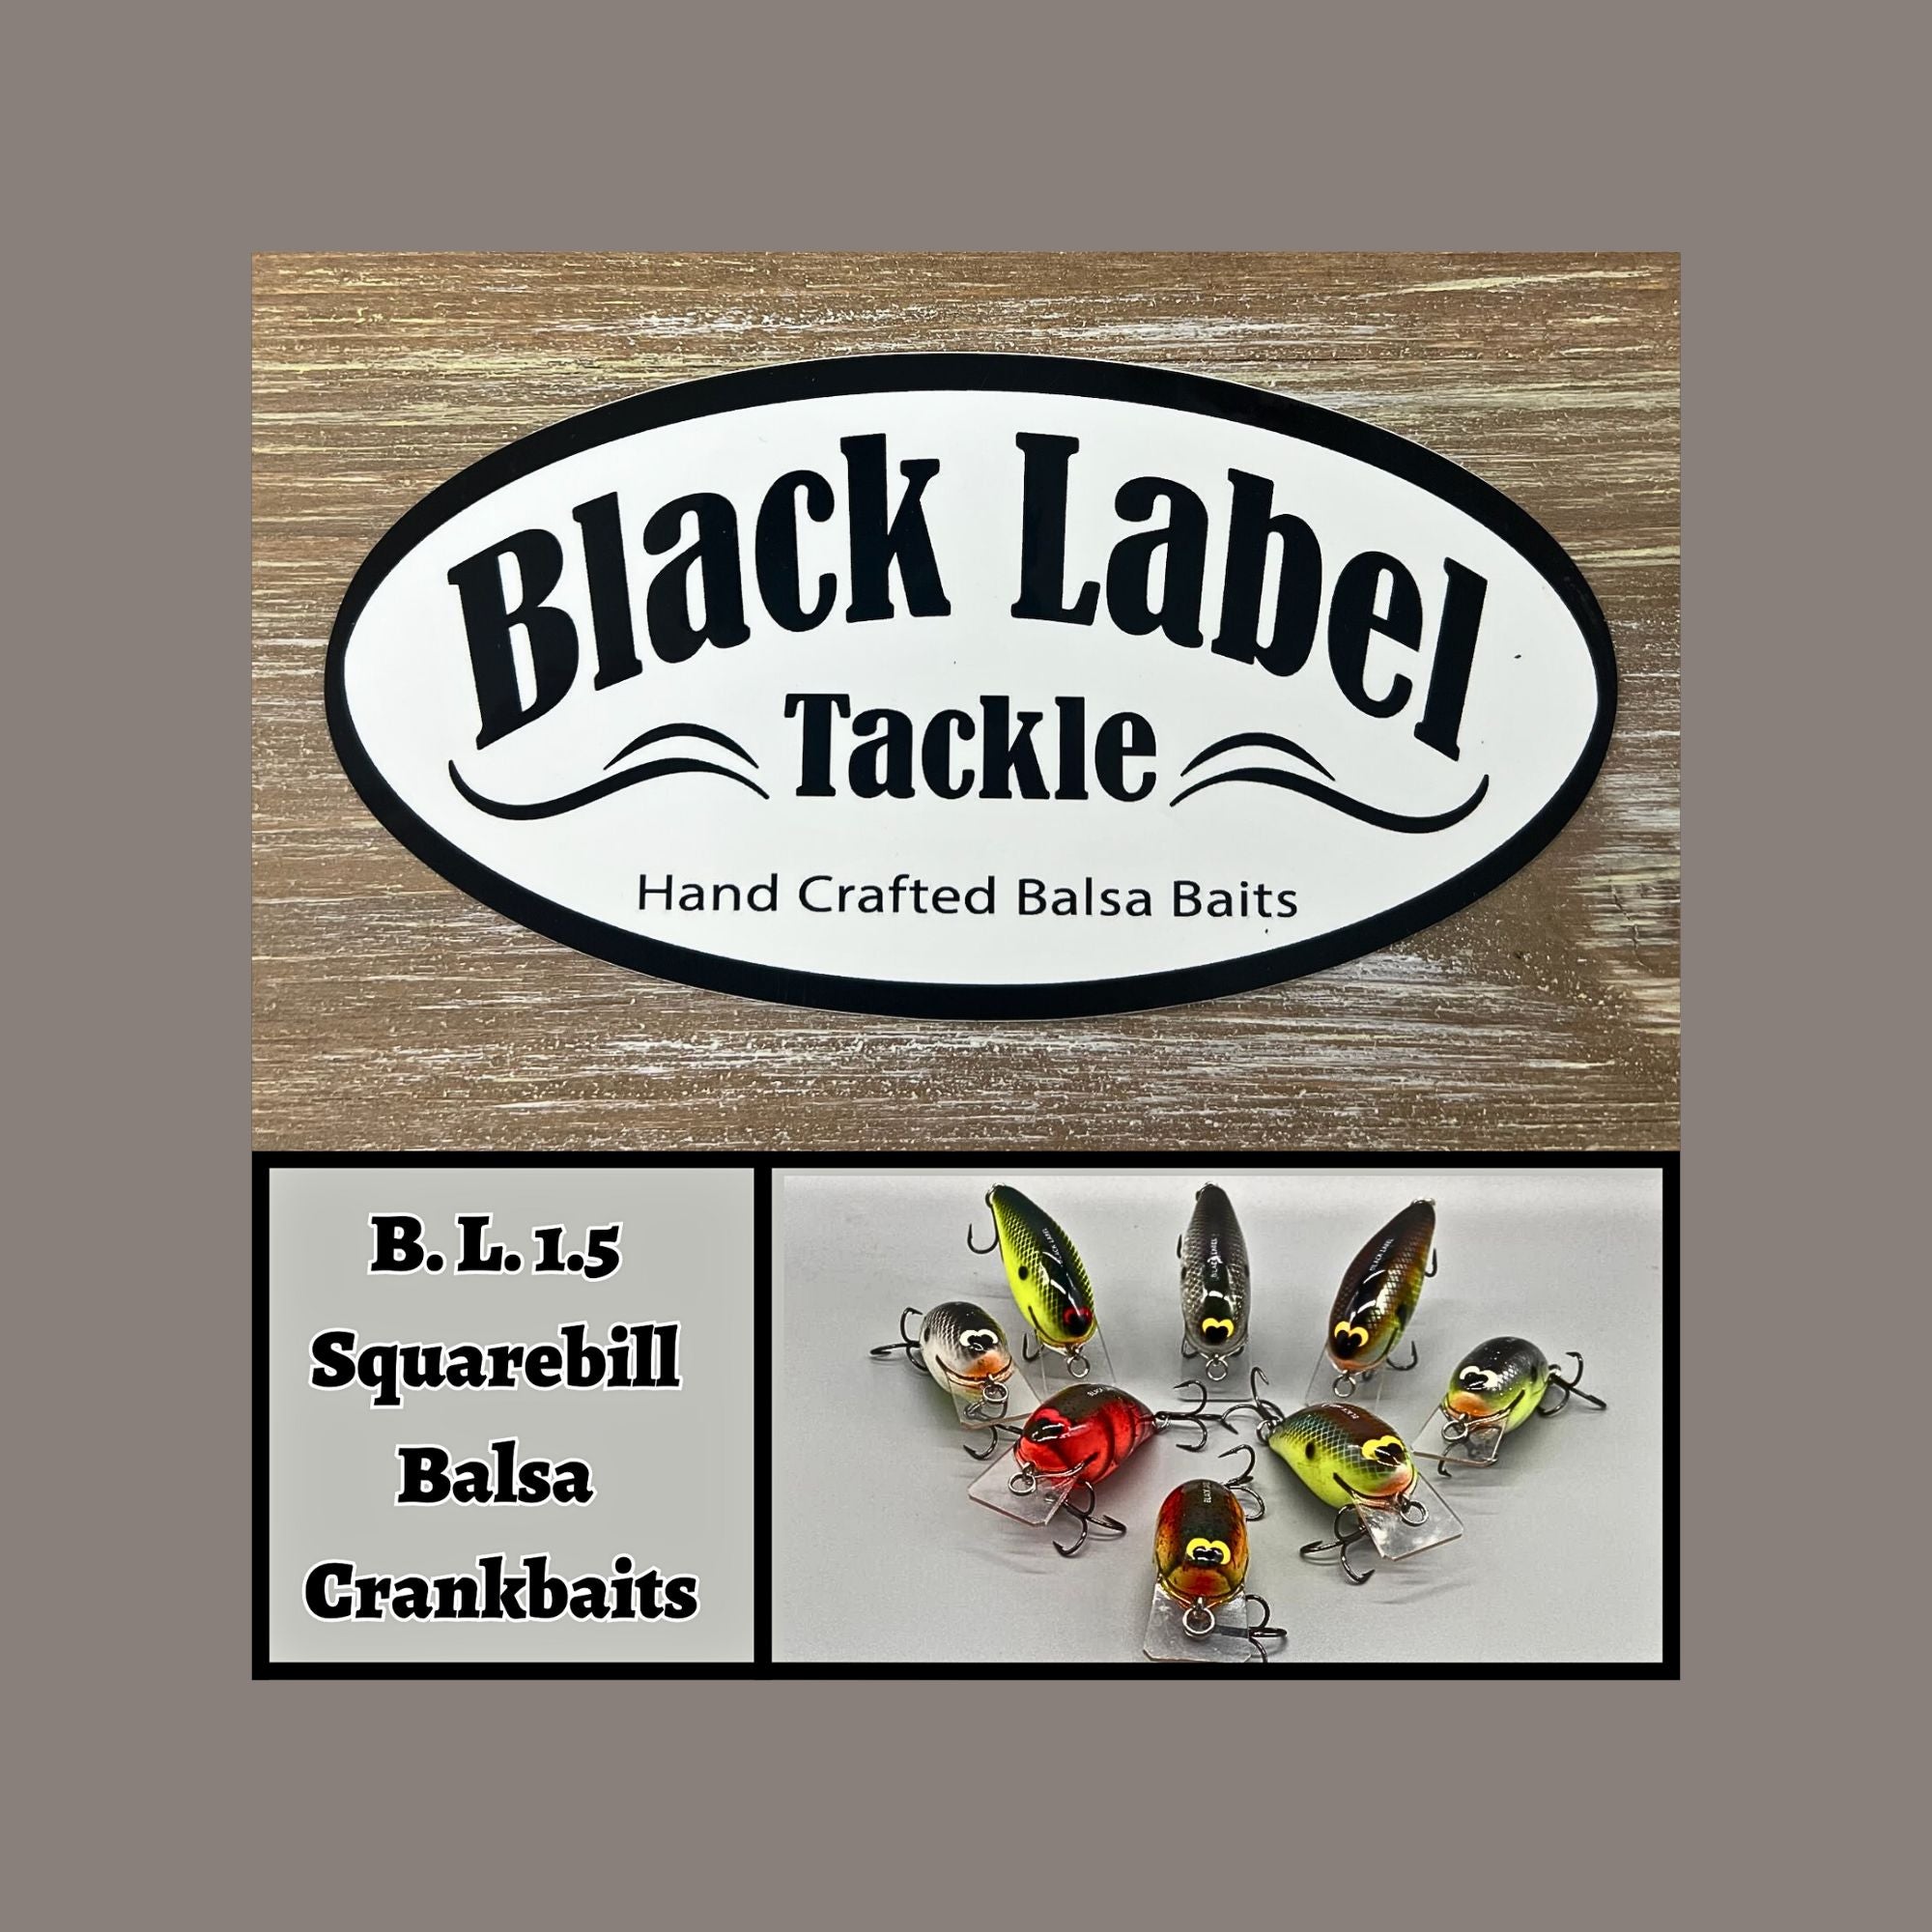 Black Label Balsa 1.5 Squarebill Crankbait, Handcrafted Balsa Baits